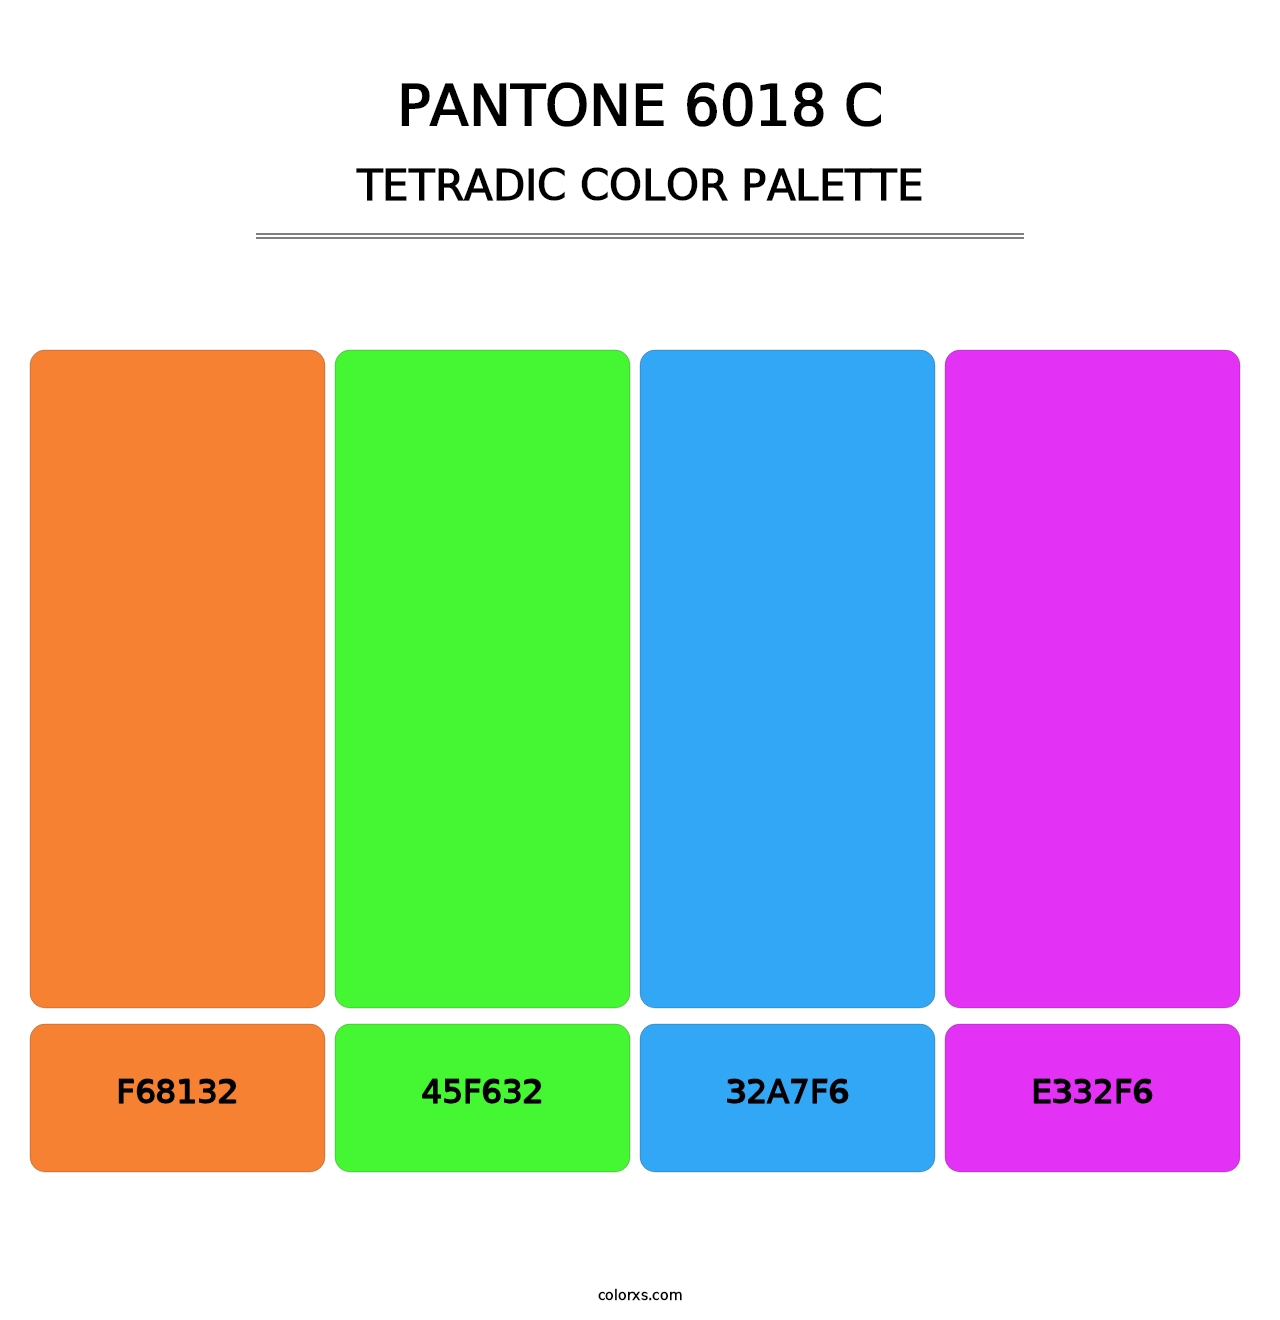 PANTONE 6018 C - Tetradic Color Palette